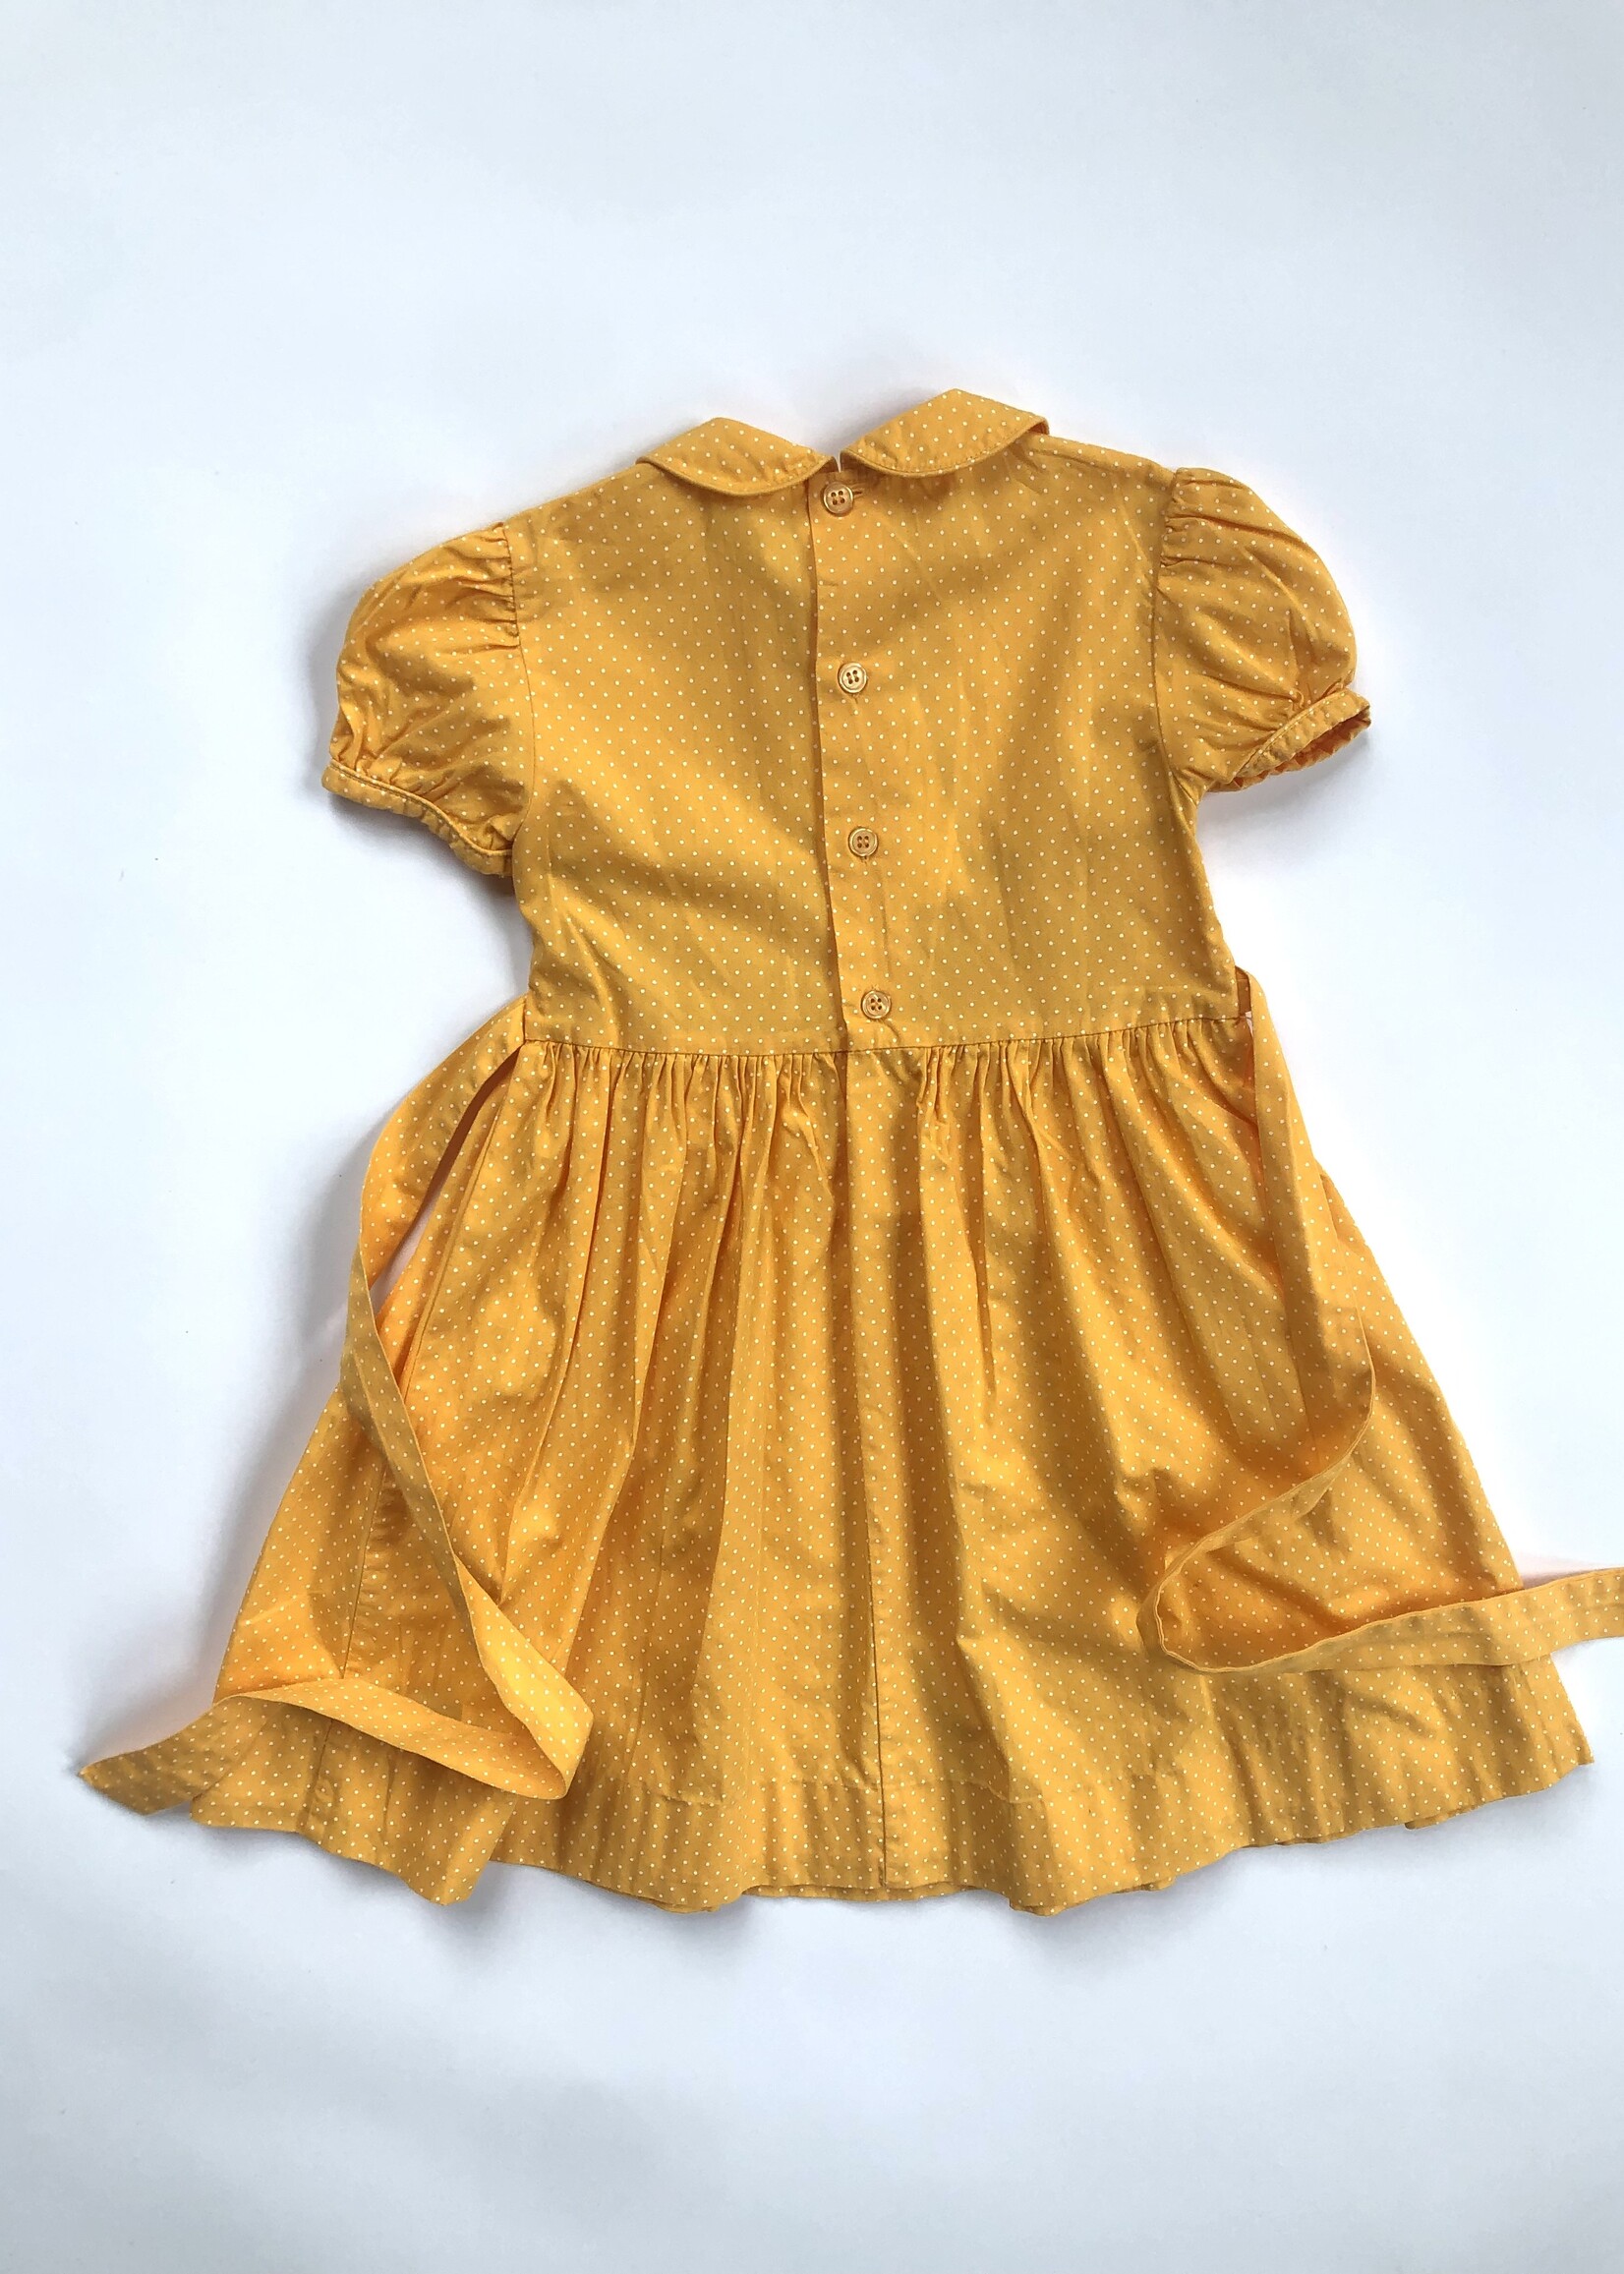 Vintage Yellow smocked raddish dress 4y